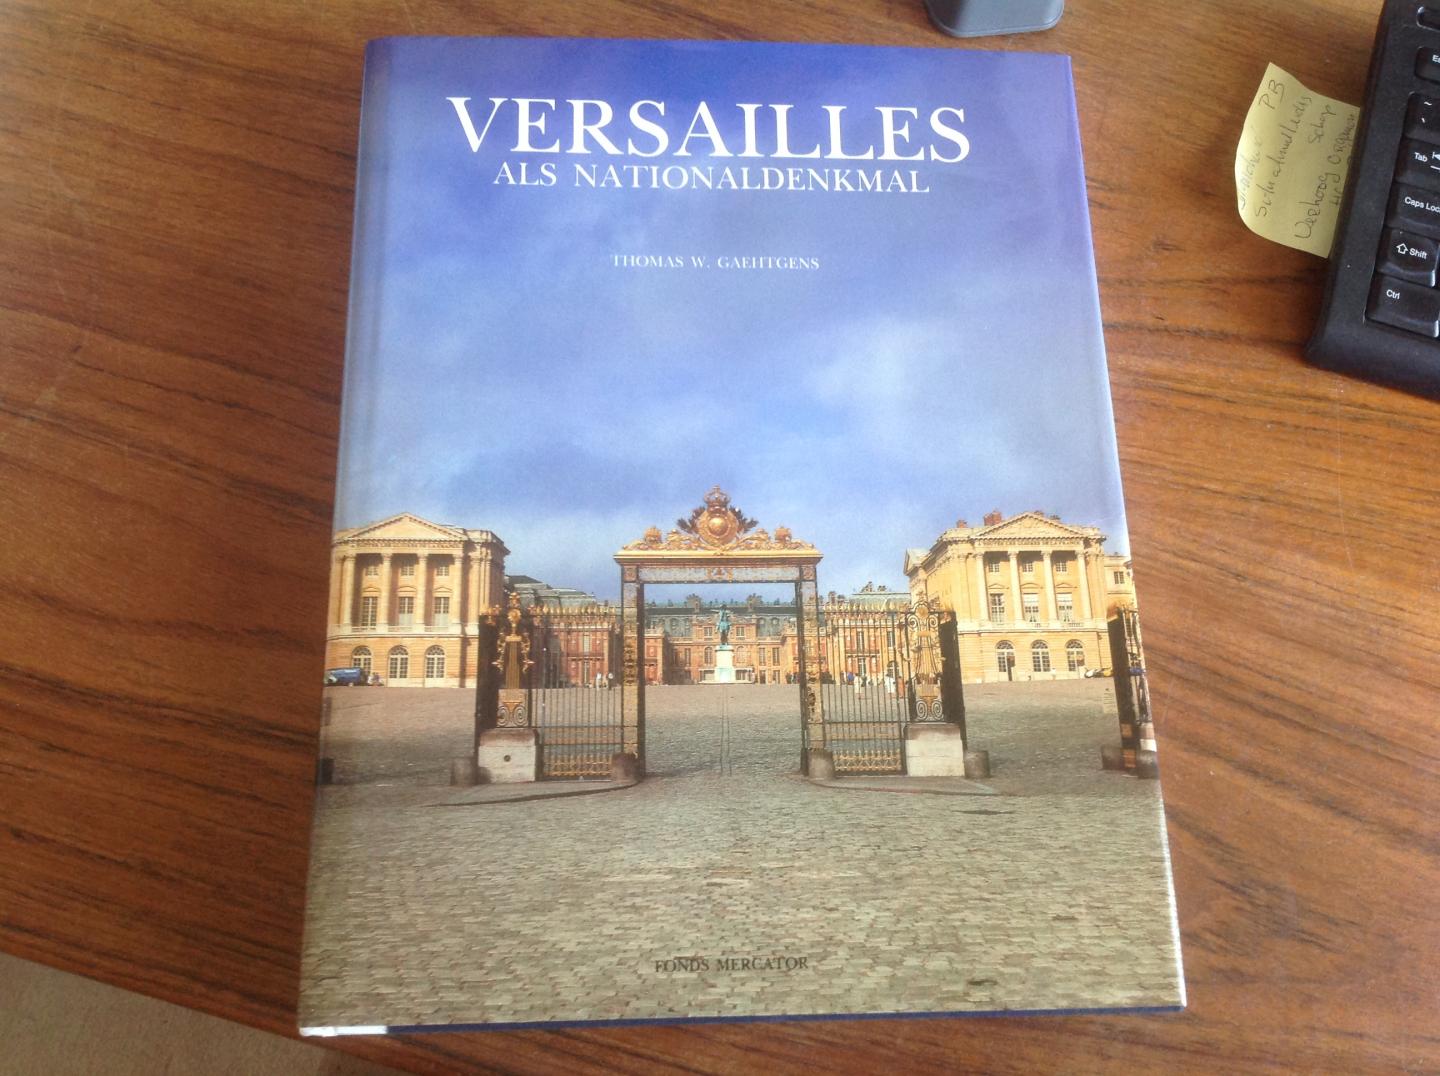 Gaehtgens, Thomas W. - Versailles als nationaldenkmal